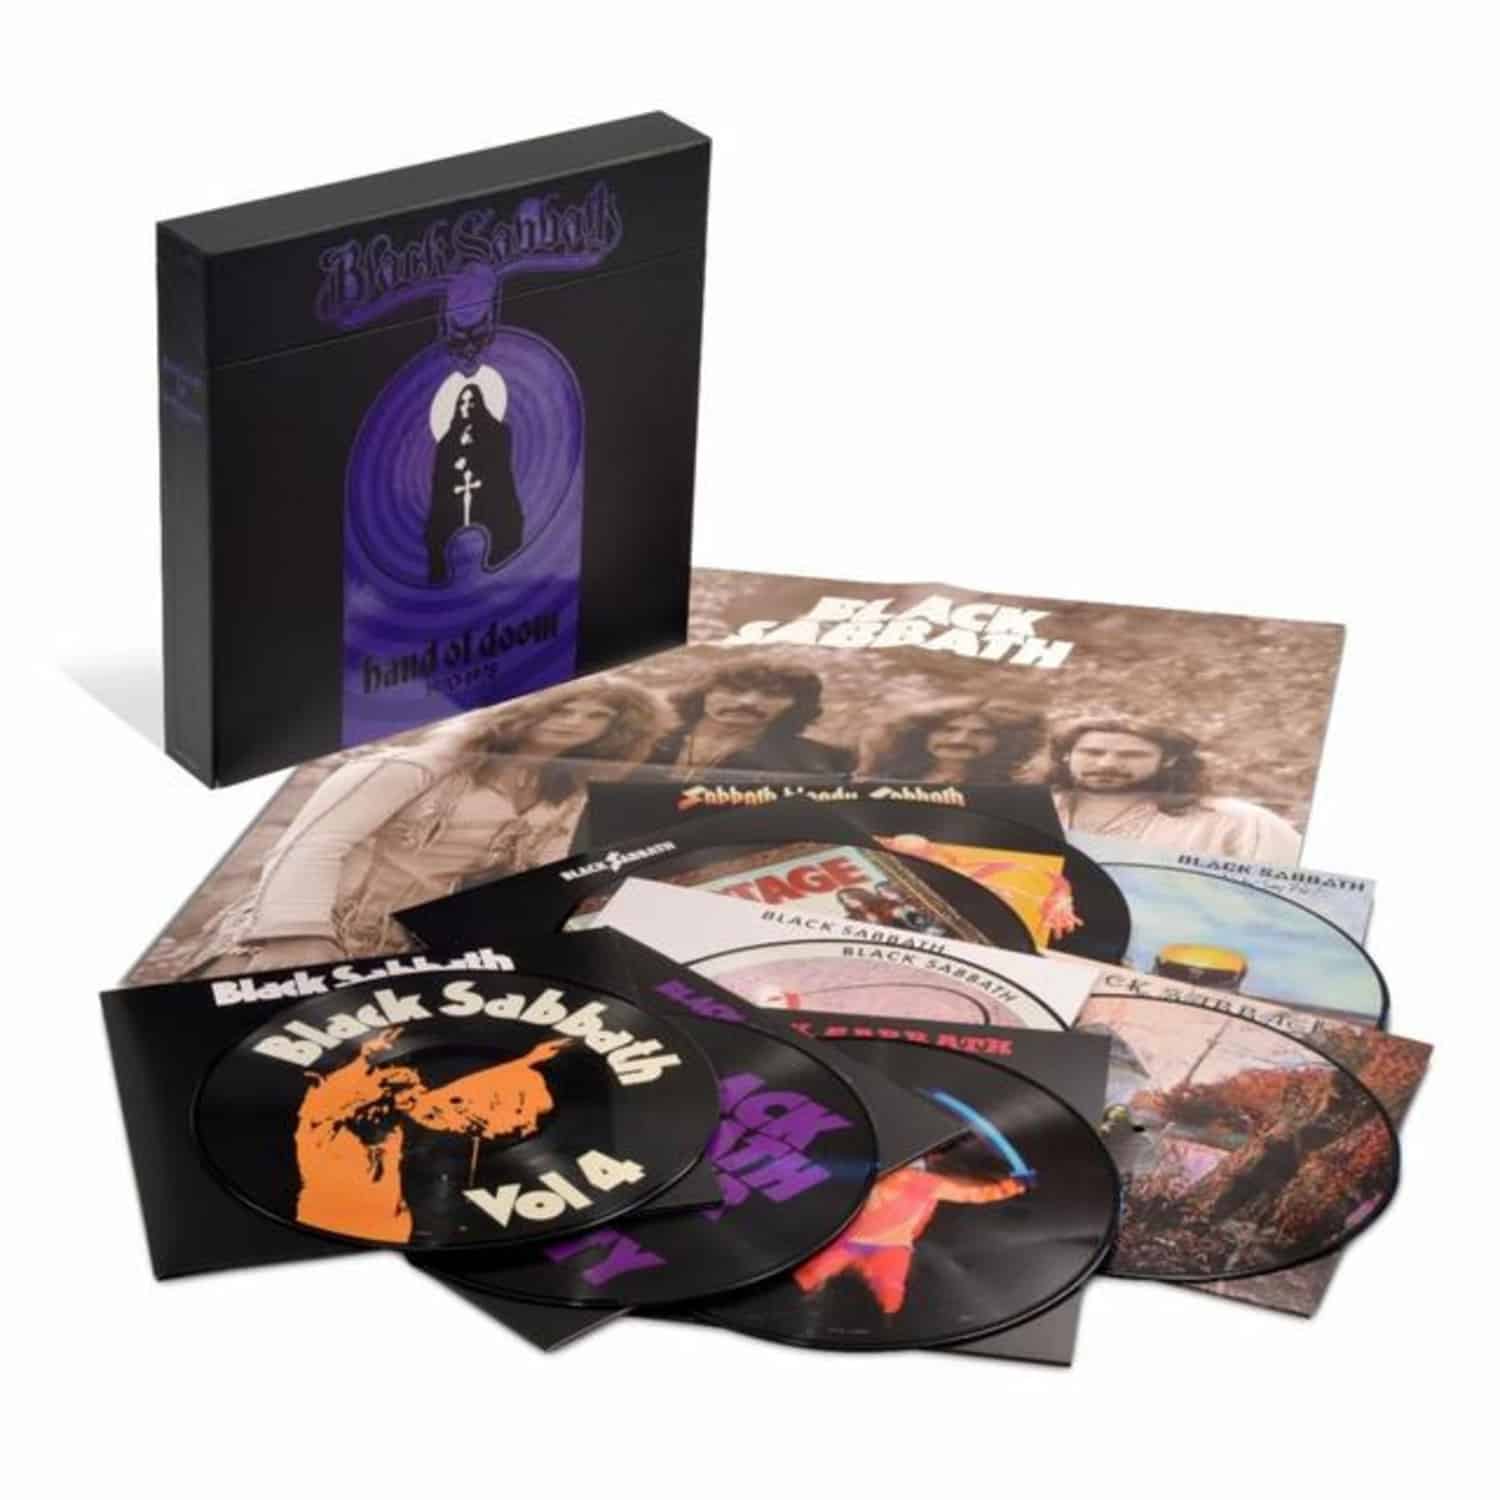 Black Sabbath - HAND OF DOOM 1970-78 